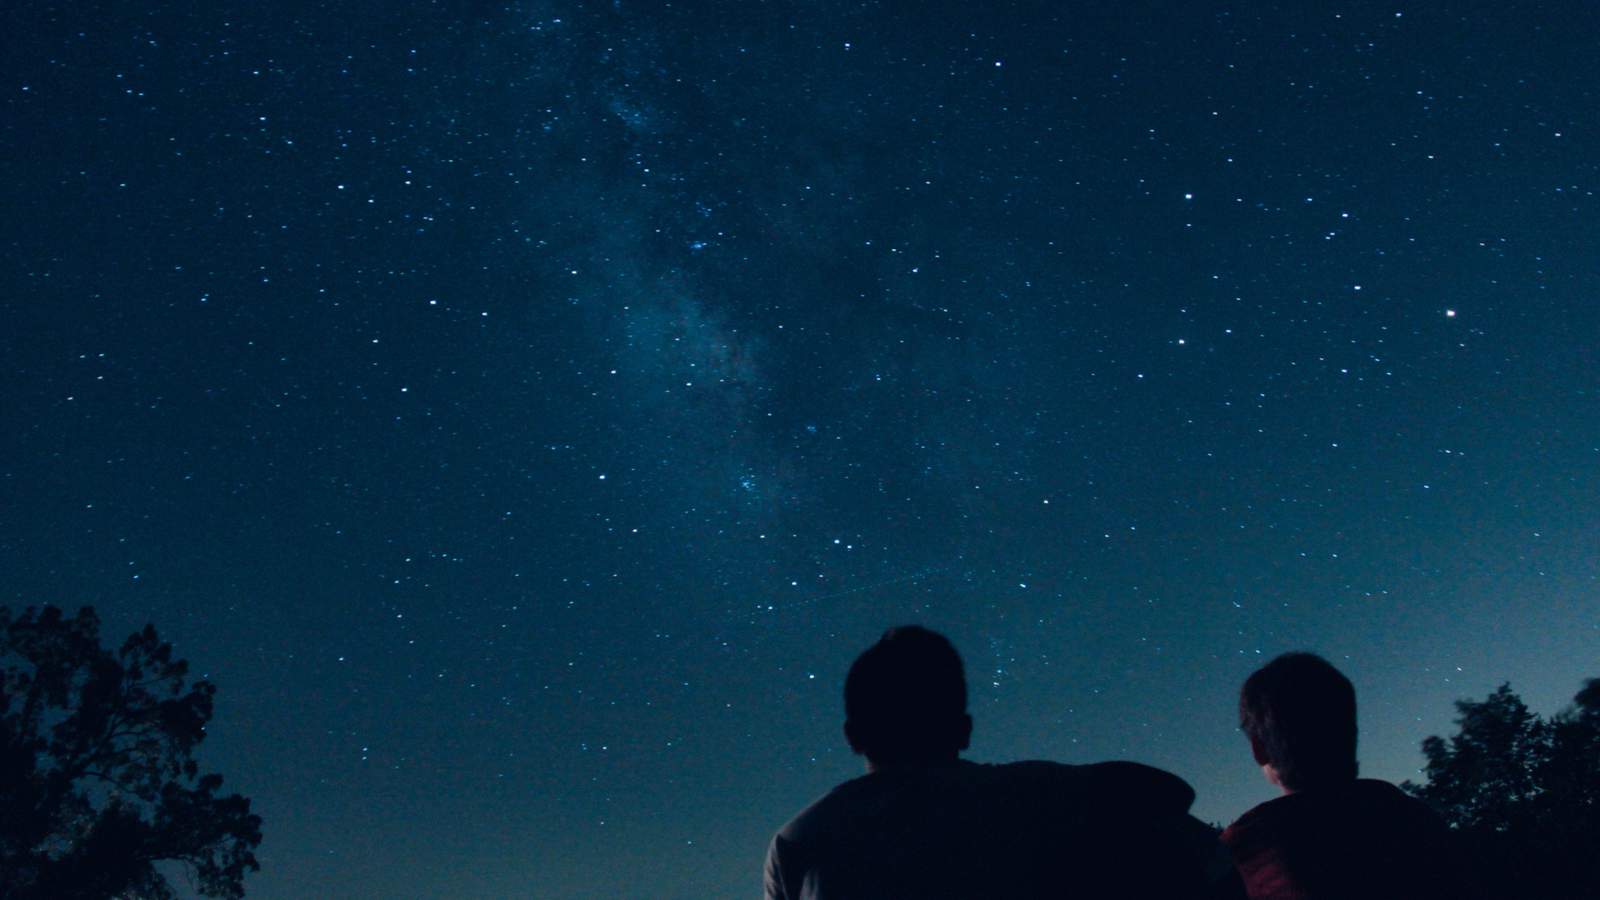 Here’s what’s in the night sky during International Dark Sky Week